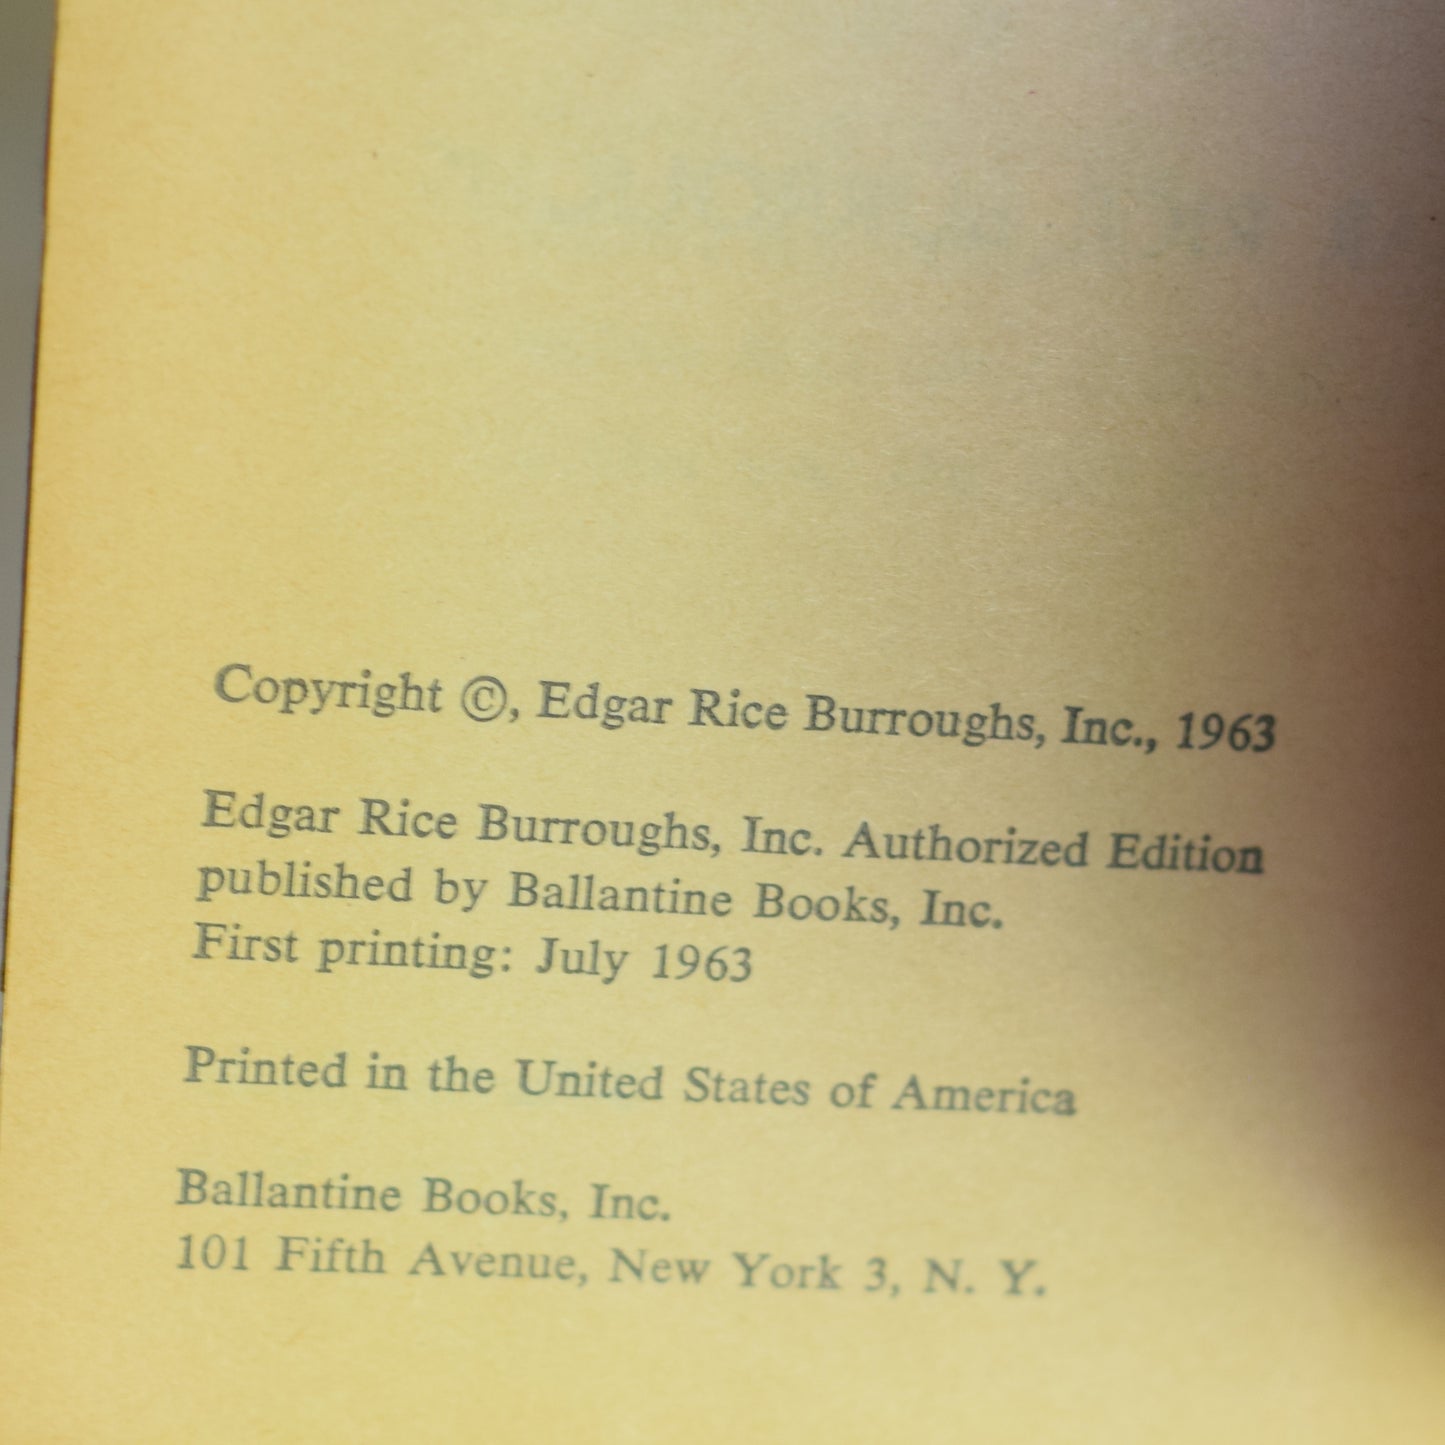 Vintage Fantasy Paperback: Edgar Rice Burroughs - Tarzan and the Ant-Men